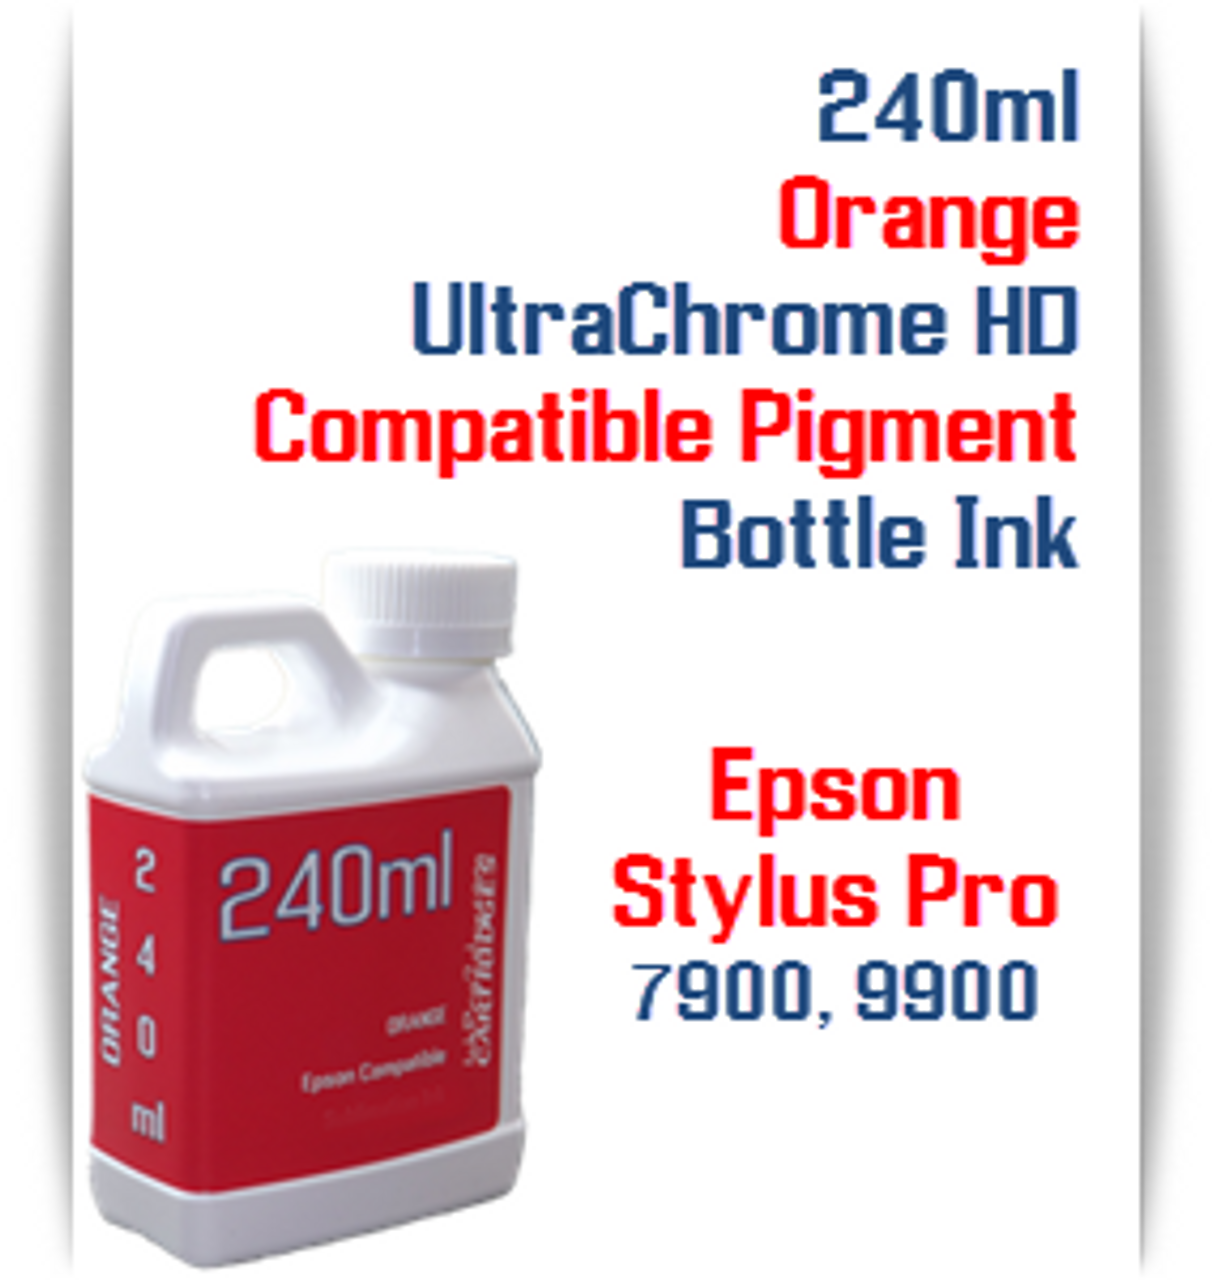 Orange 240ml Bottle Compatible UltraChrome HDR Pigment Ink Epson Stylus Pro 4900, 7900, 9900 Printers